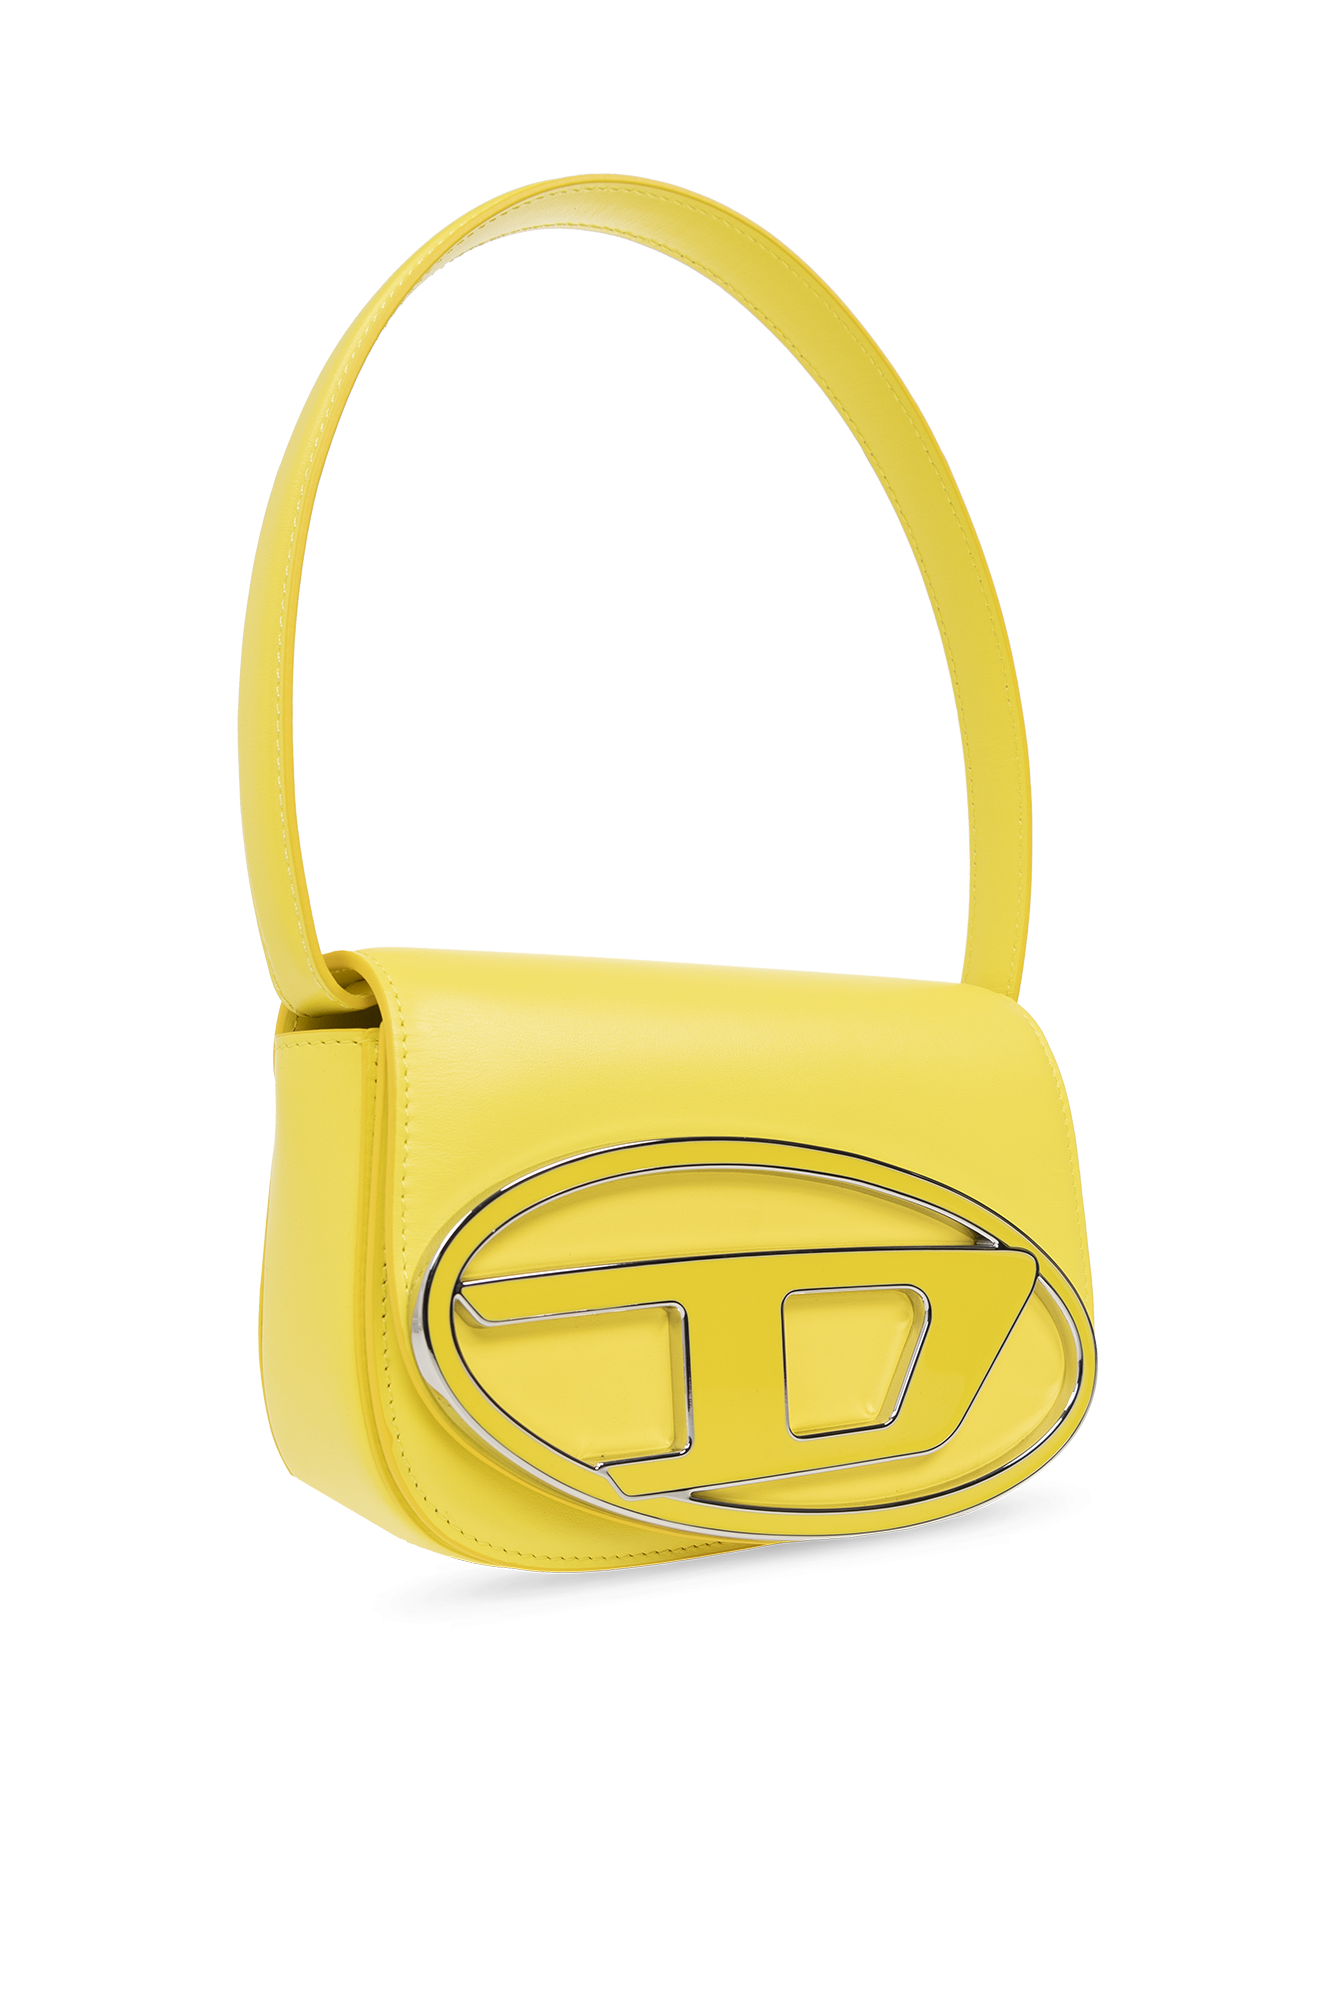 Diesel ‘1DR’ shoulder bag | Women's Bags | Vitkac